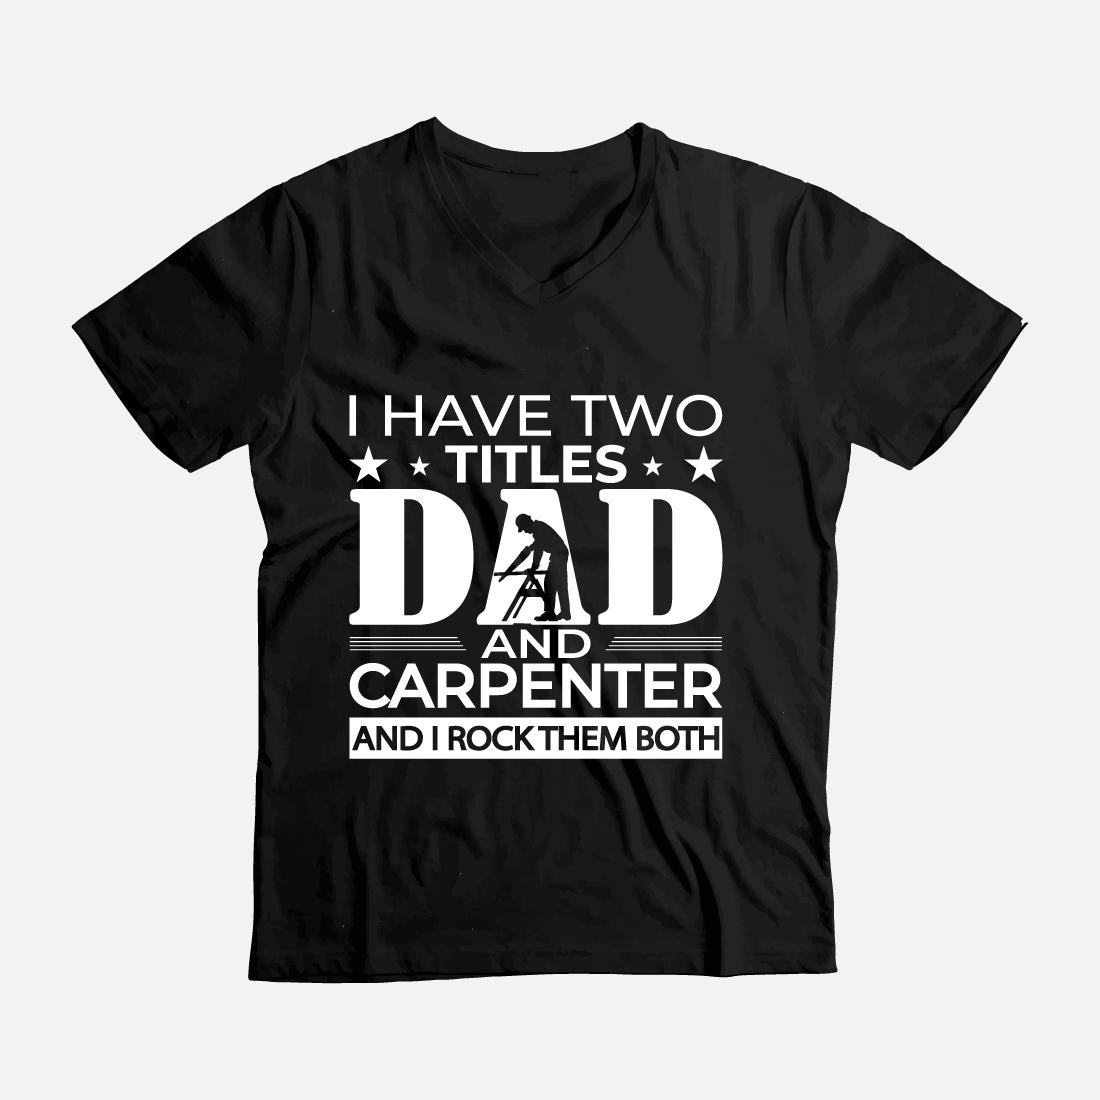 Carpenter dad t-shirt design - MasterBundles